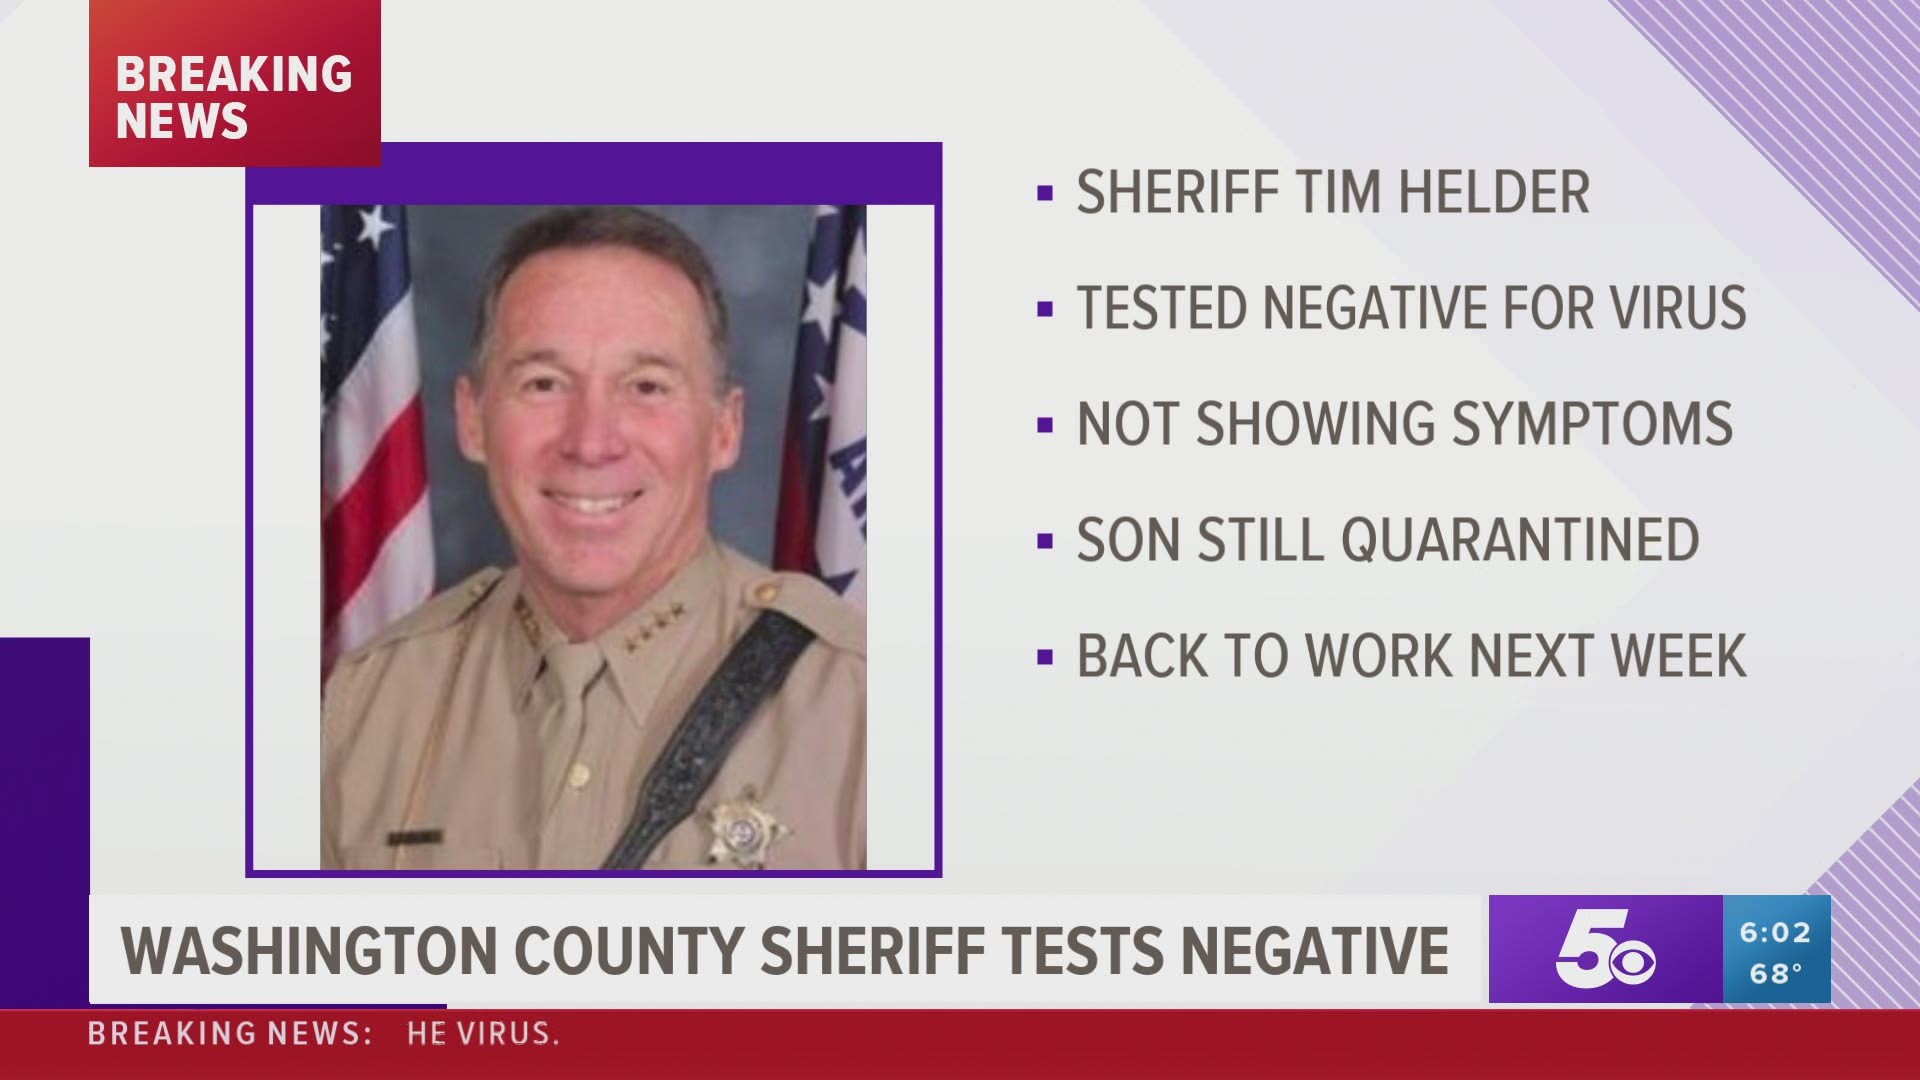 Washington County Sheriff tests negative for coronavirus